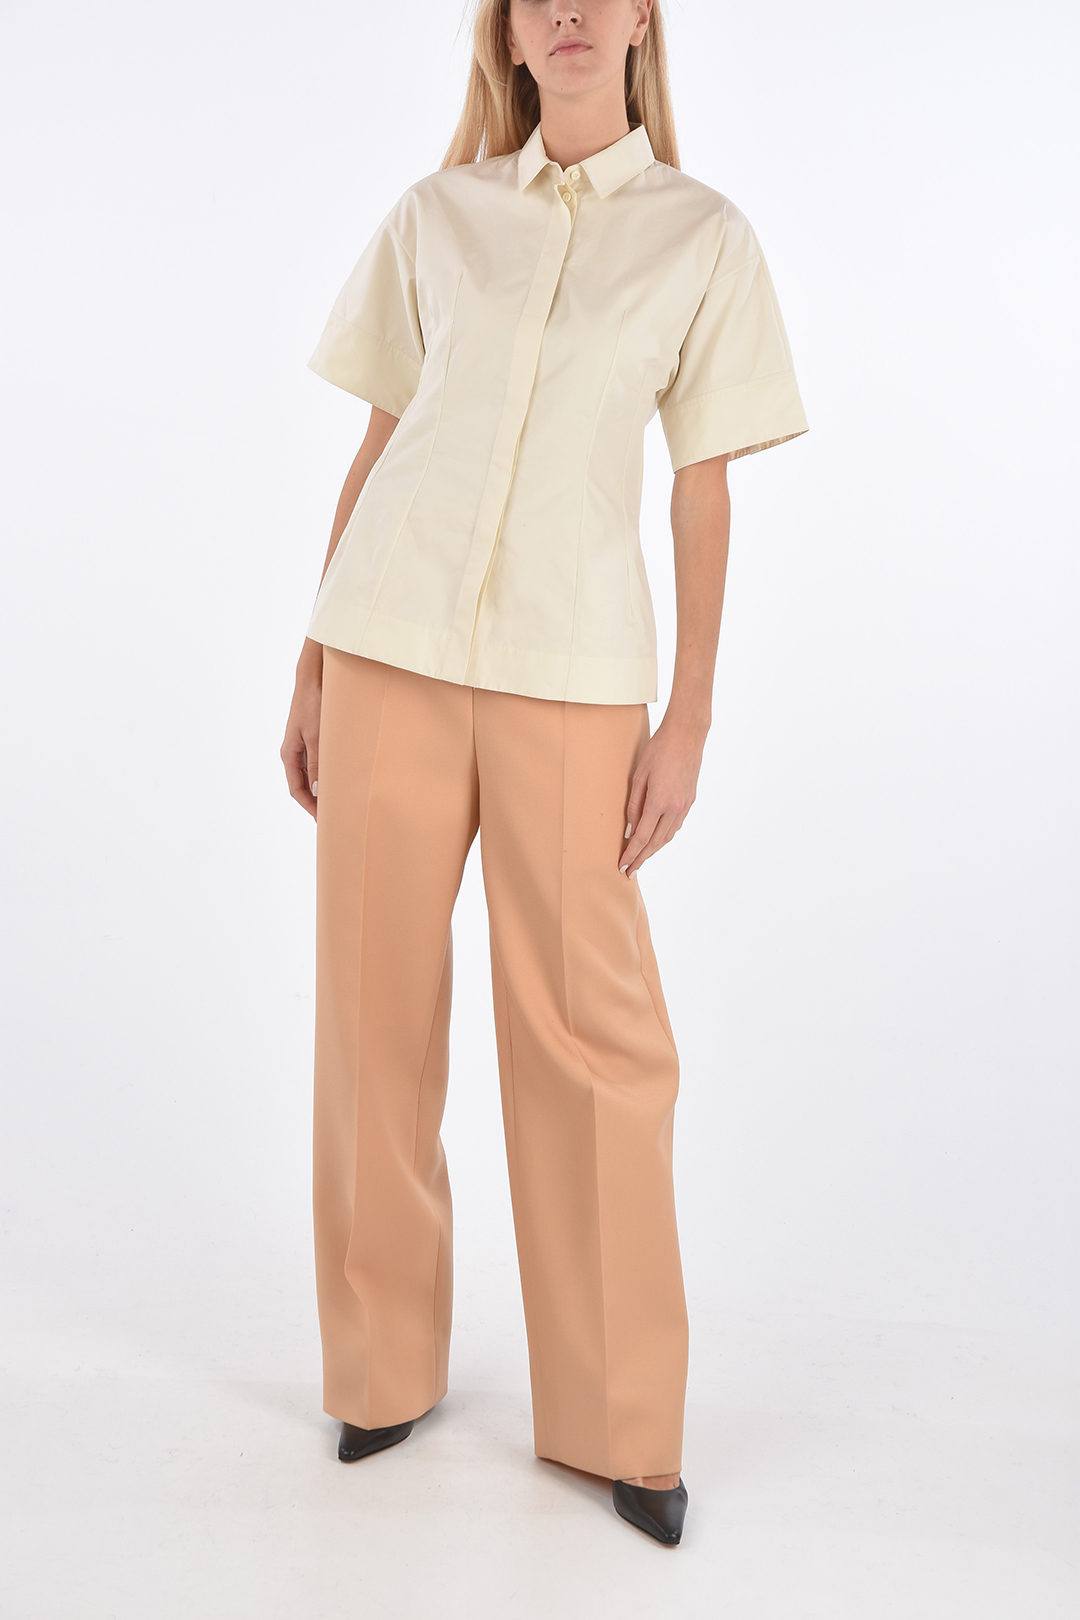 Circyy Women Short Shirts Beige Summer Short Sleeve Square Collar